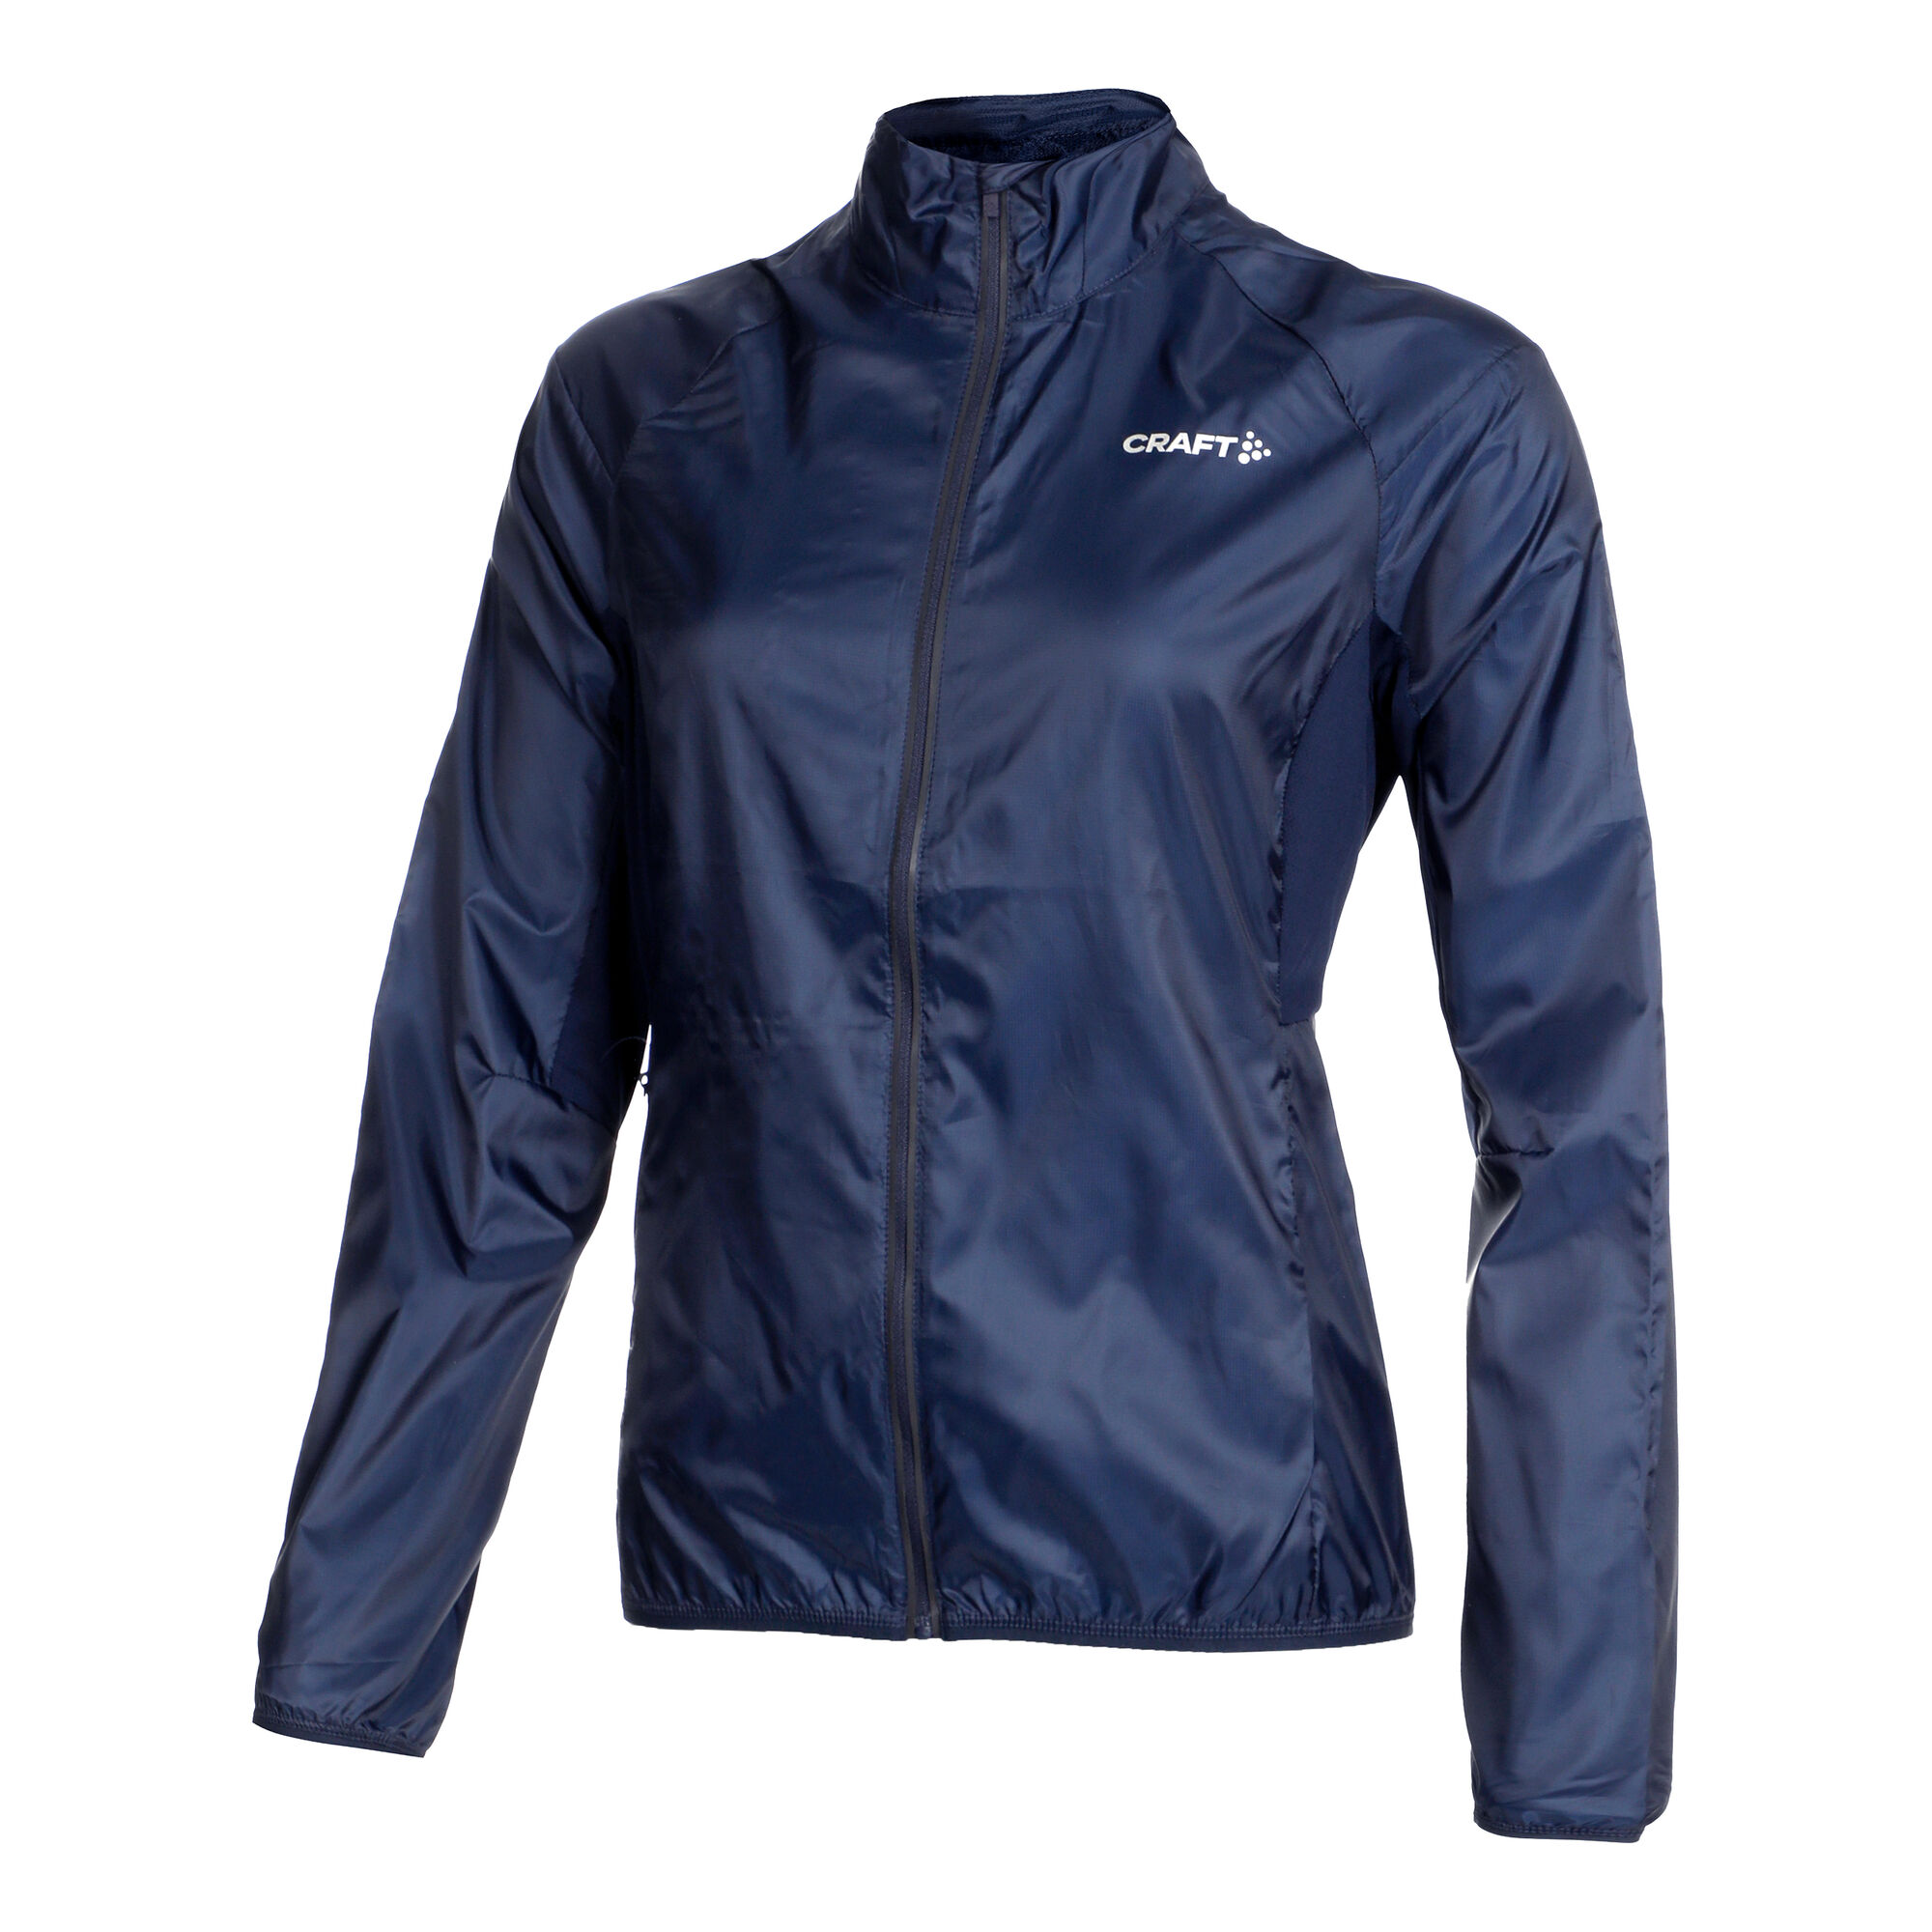 Buy Craft Pro Hypervent Running Jacket Women Dark Blue online